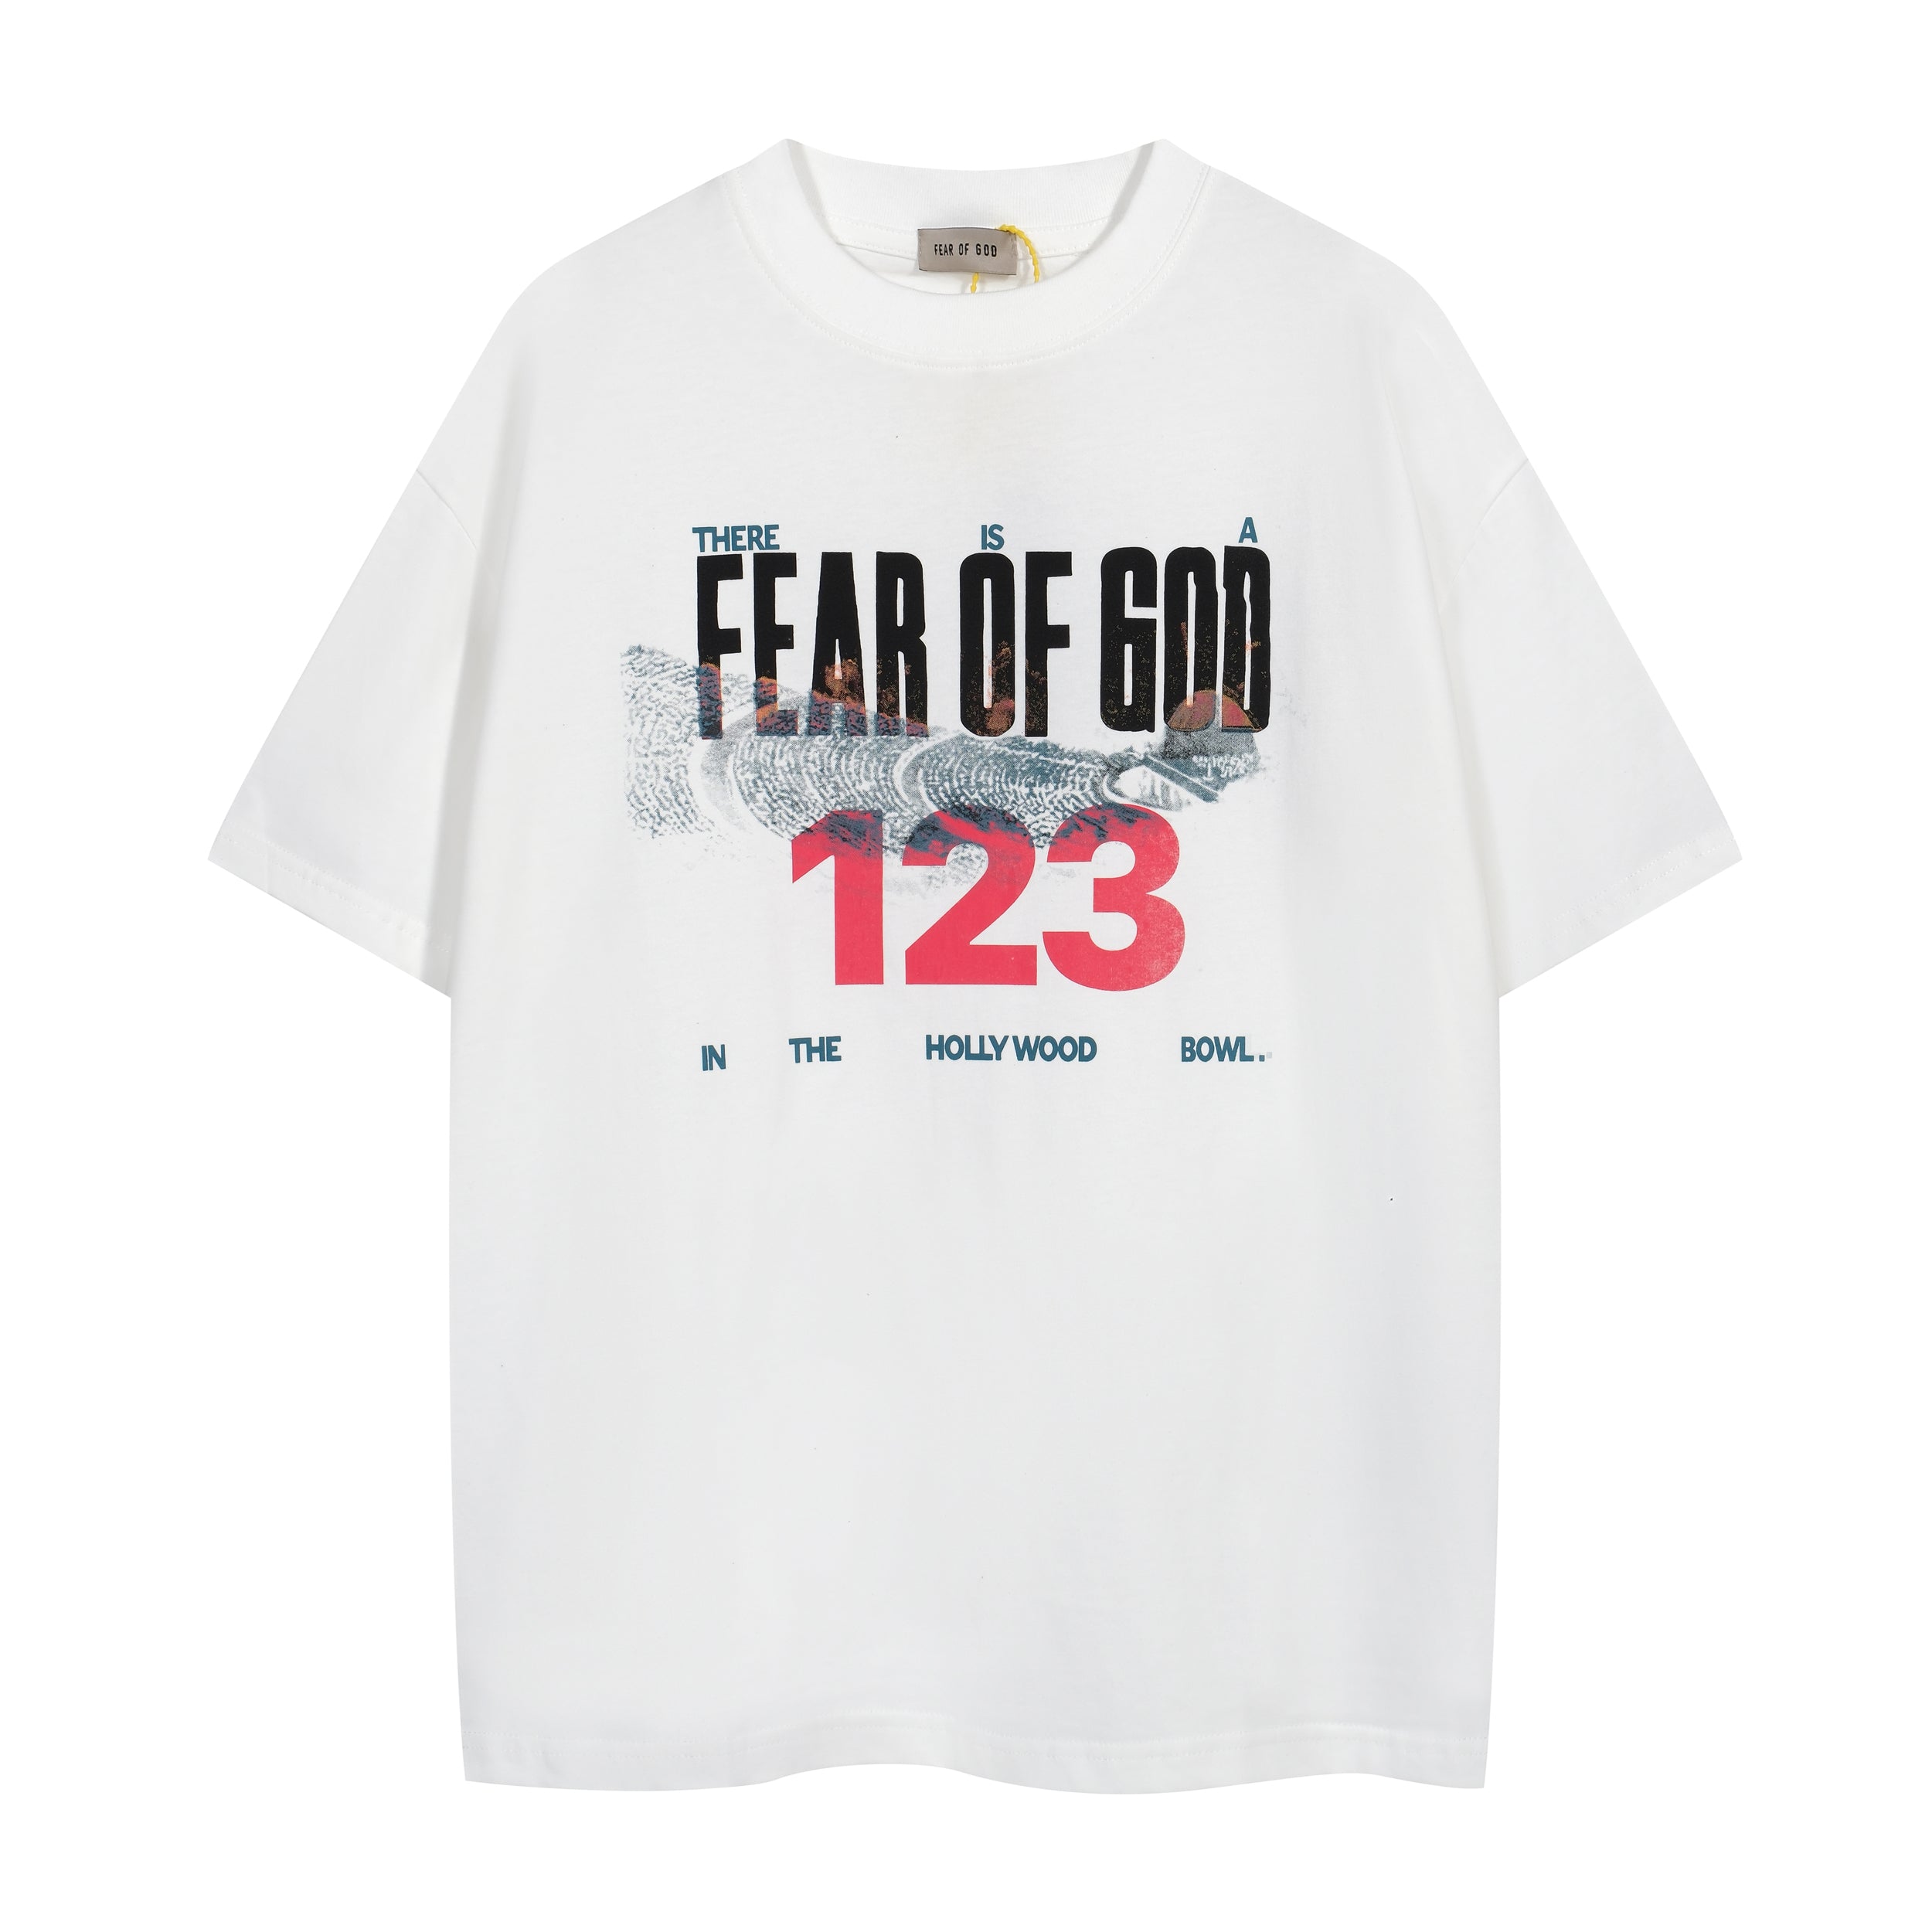 FEAR OF GOD x RRR 123